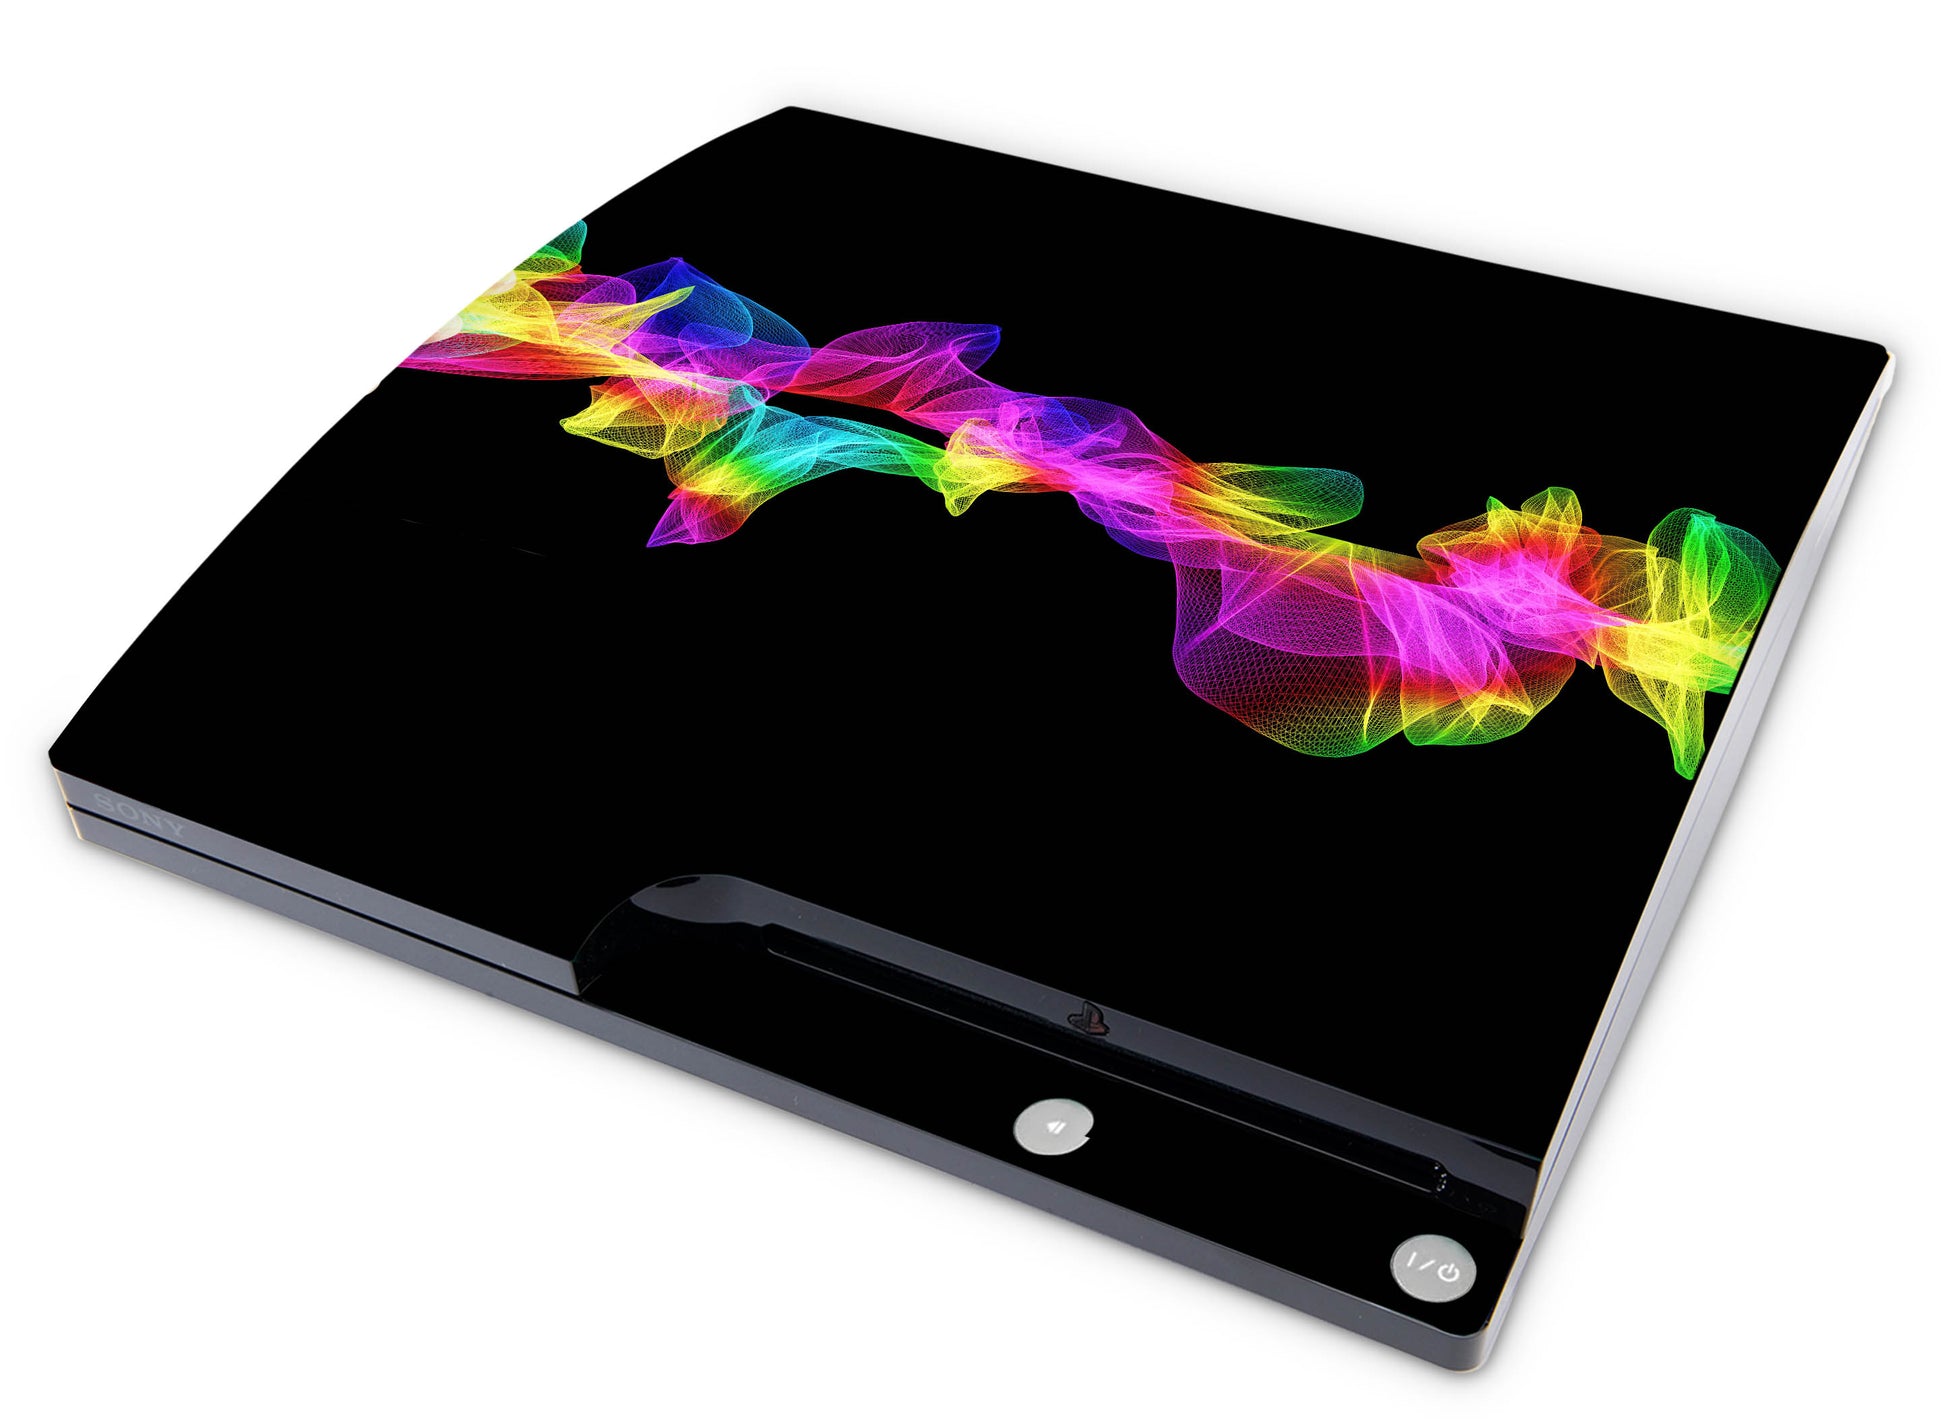 Playstation 3 PS3 Slim Skins Design Schutzfolie Vinyl Cover waving colors Elektronik-Sticker & -Aufkleber skins4u   